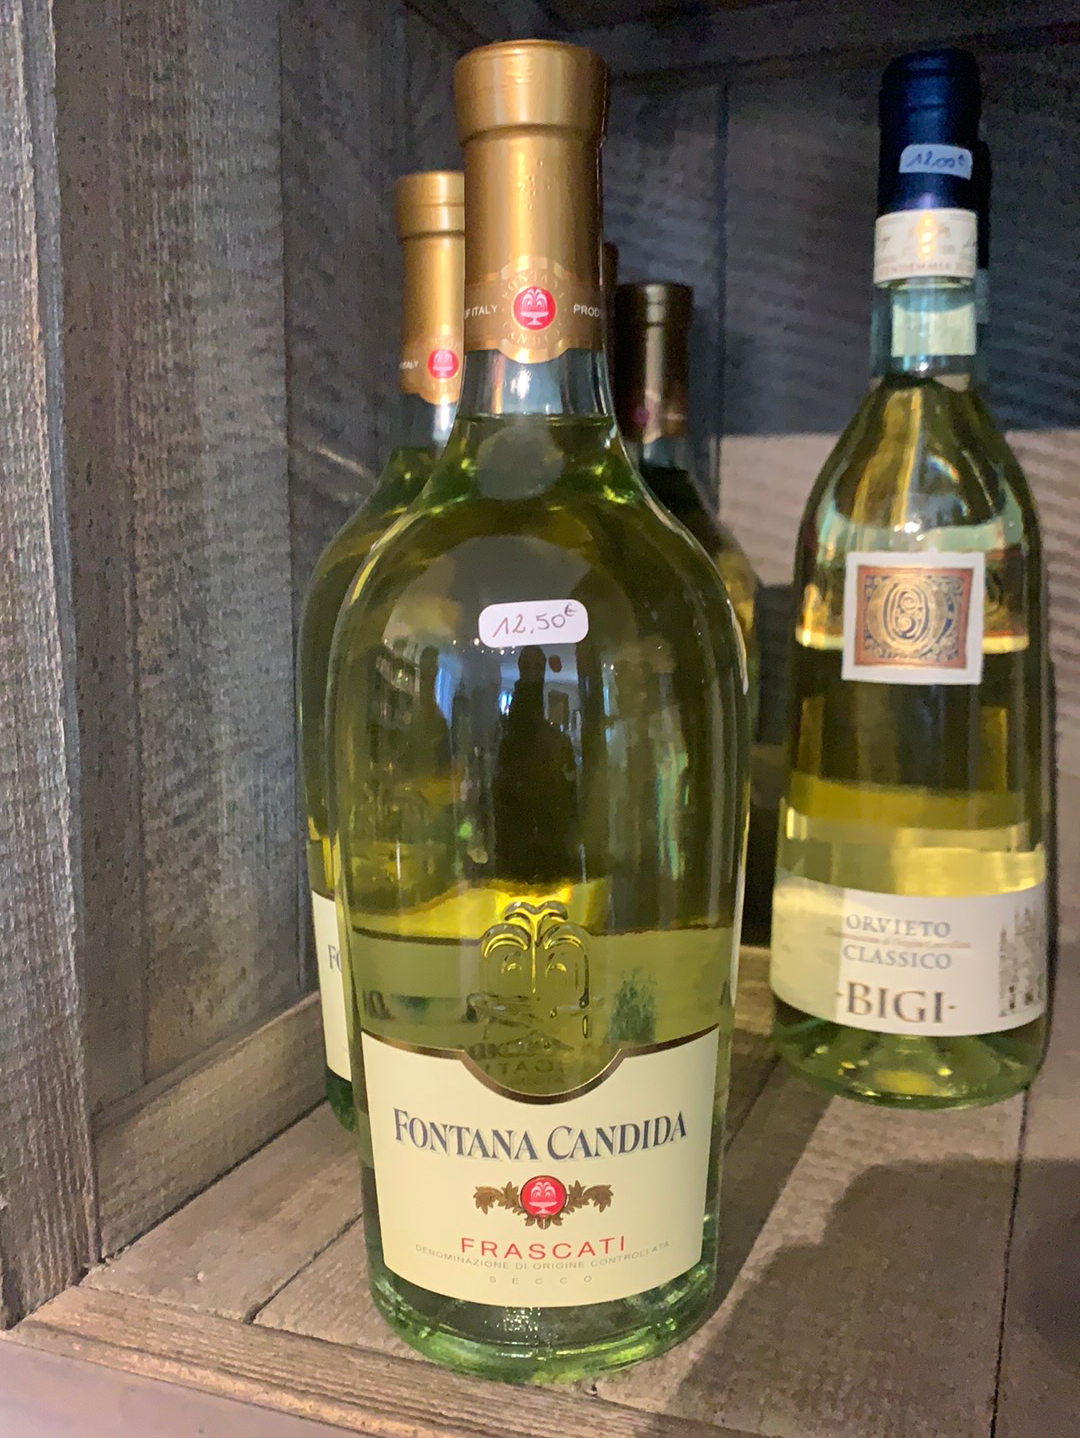 Vin italien Frascati Fontana Candida - La Tour de Pise